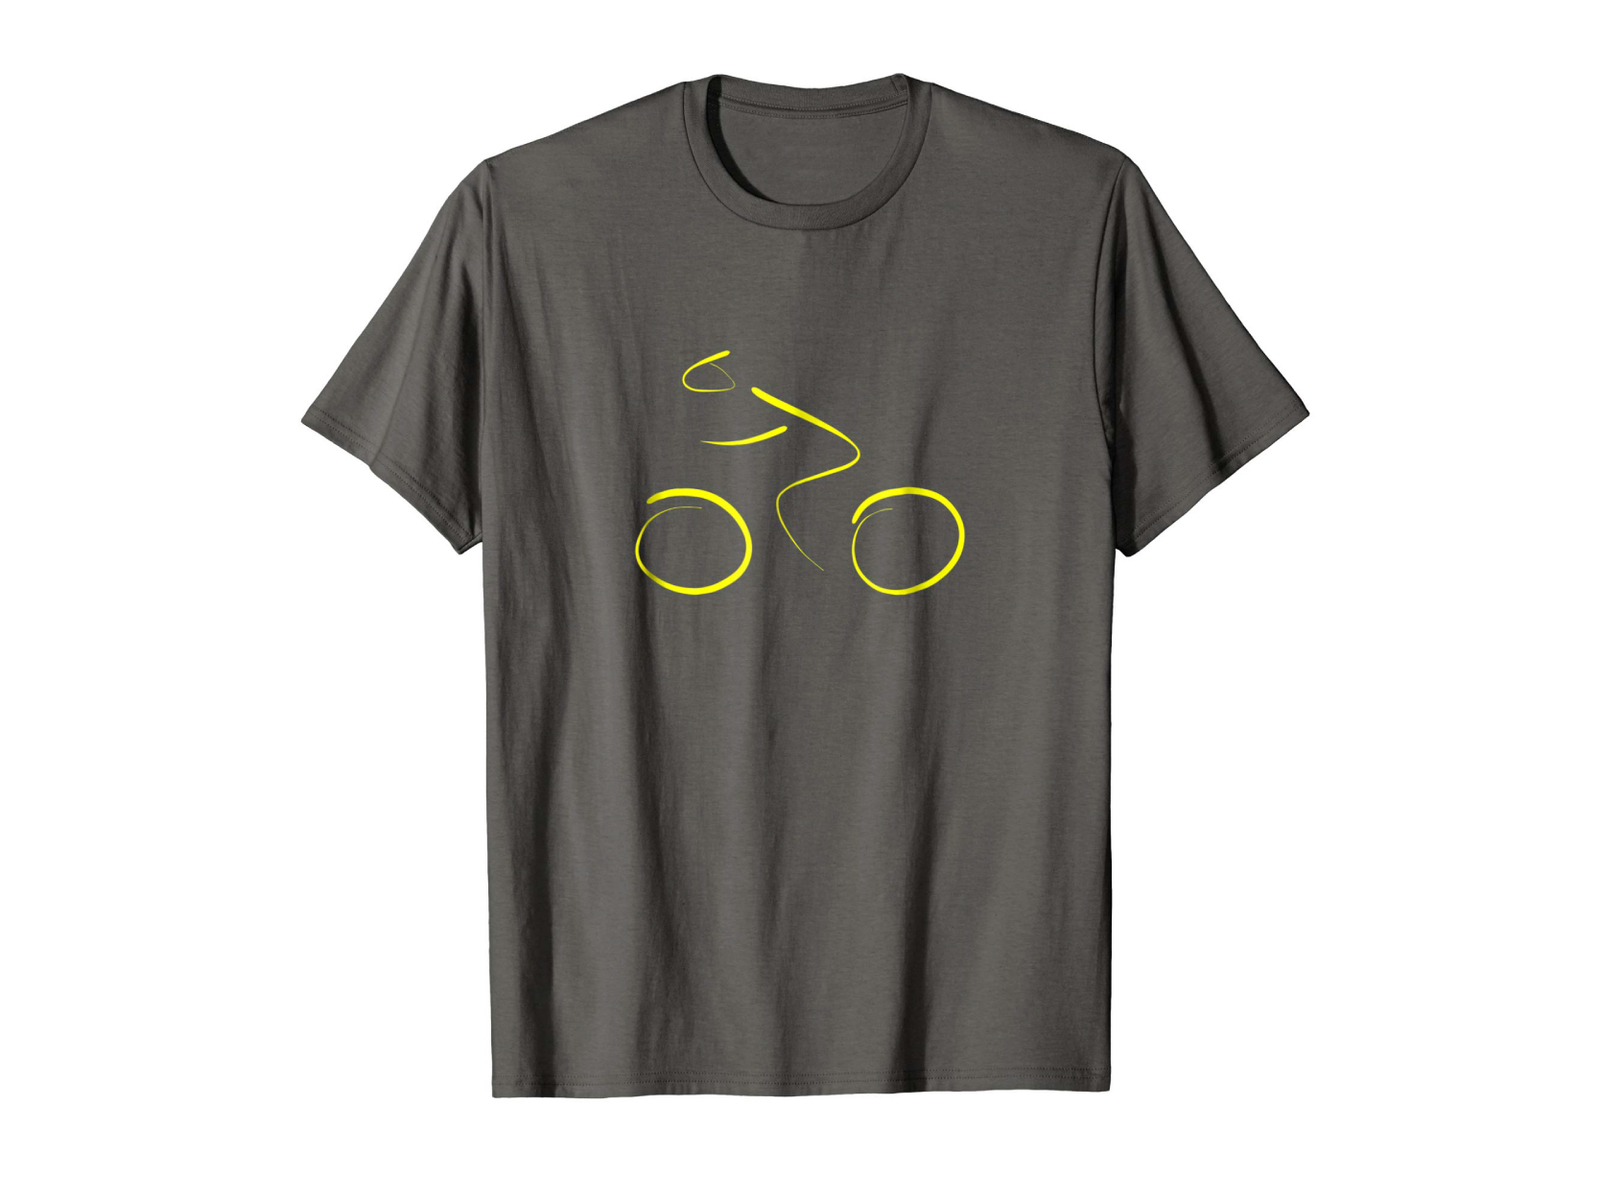 Bike Lovers T-shirt Funny Cycling Shirt by MadeByBono on Dribbble